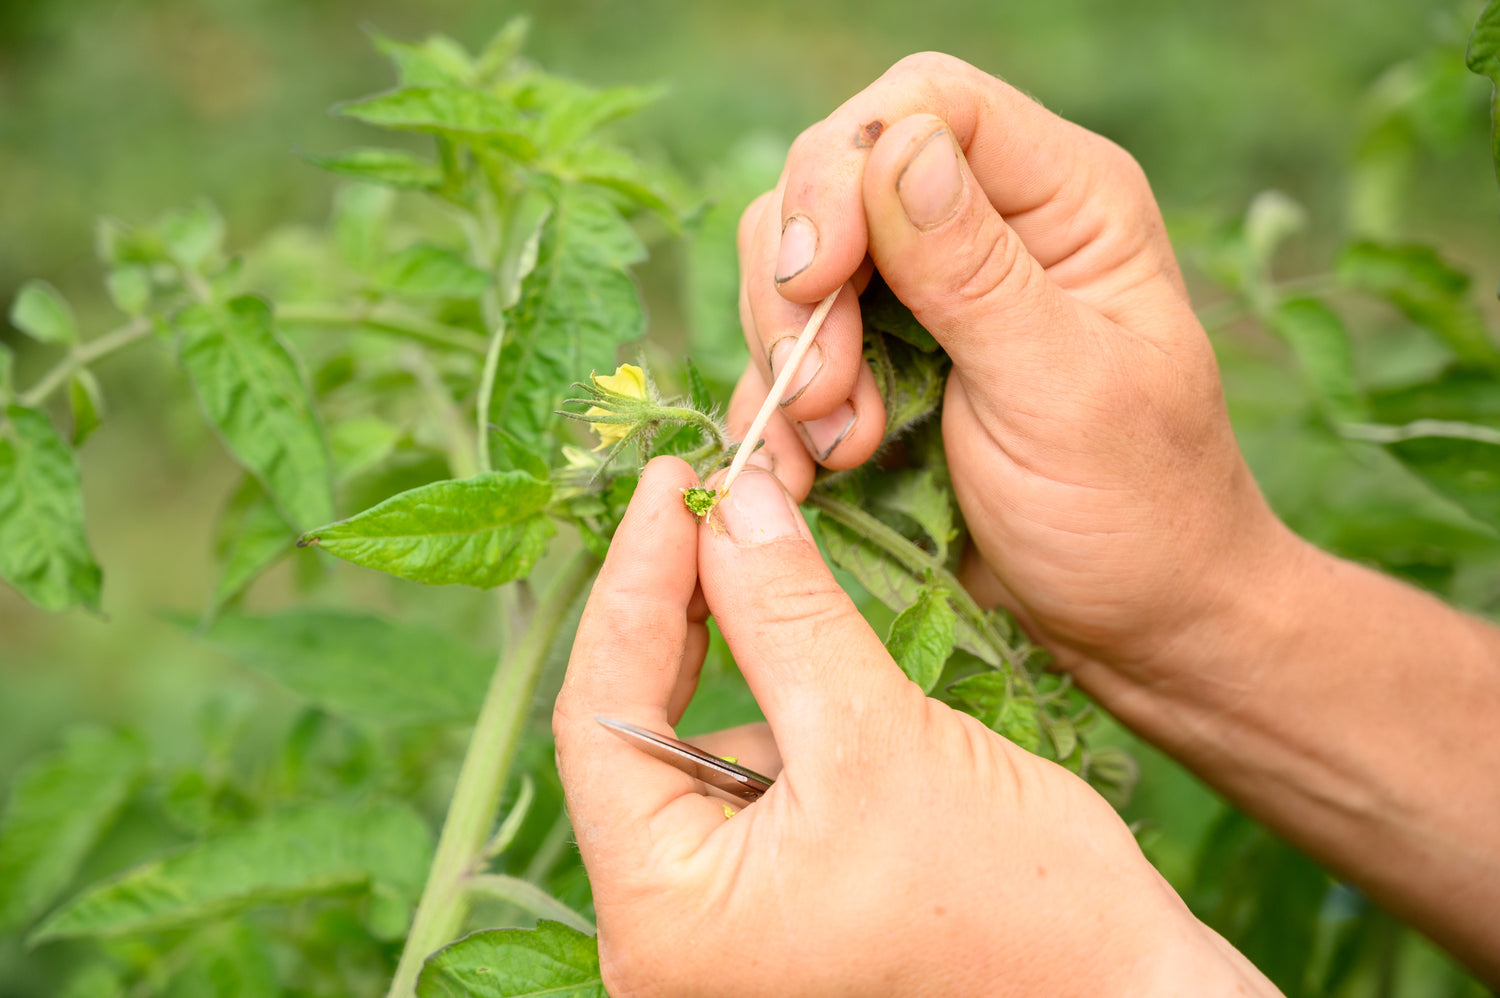 Hand pollinating heirloom non-gmo tomato for organic tomato seed production in Canada